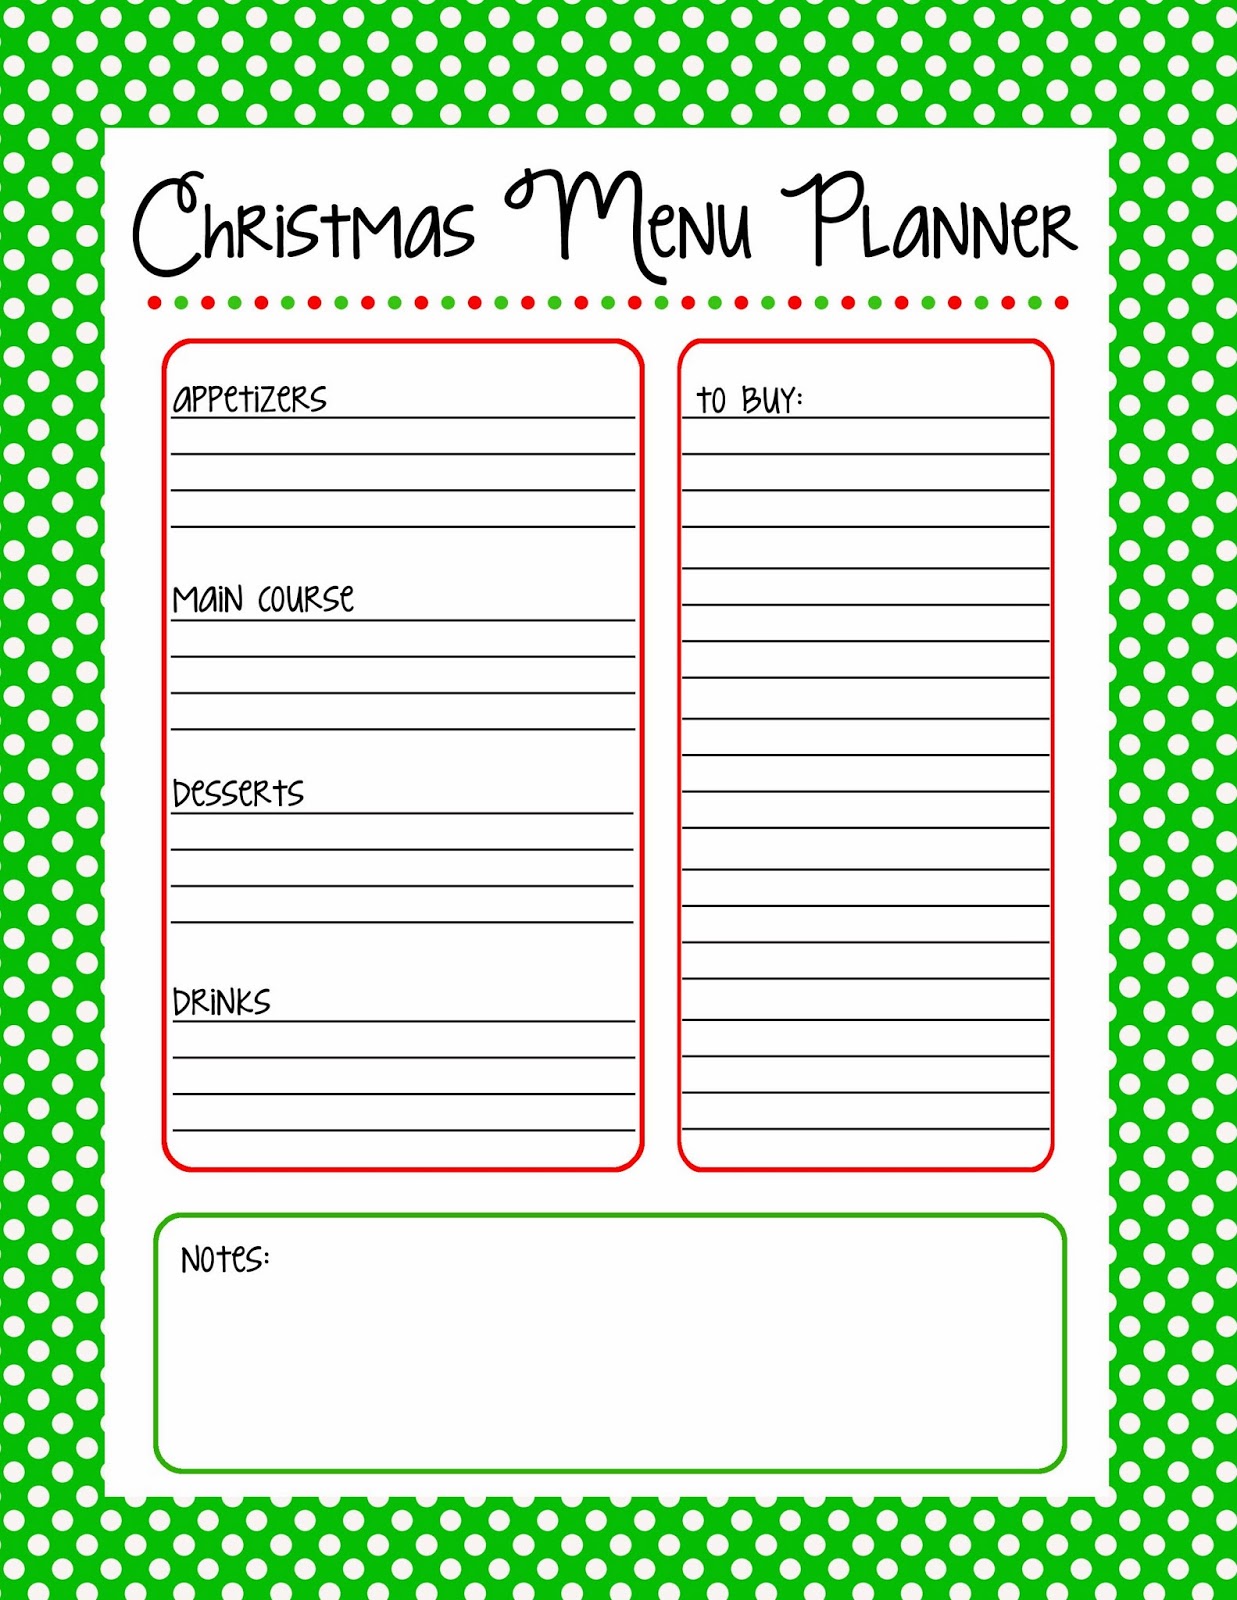 Christmas Menu Planner Free Printable {25 Days to an Organized